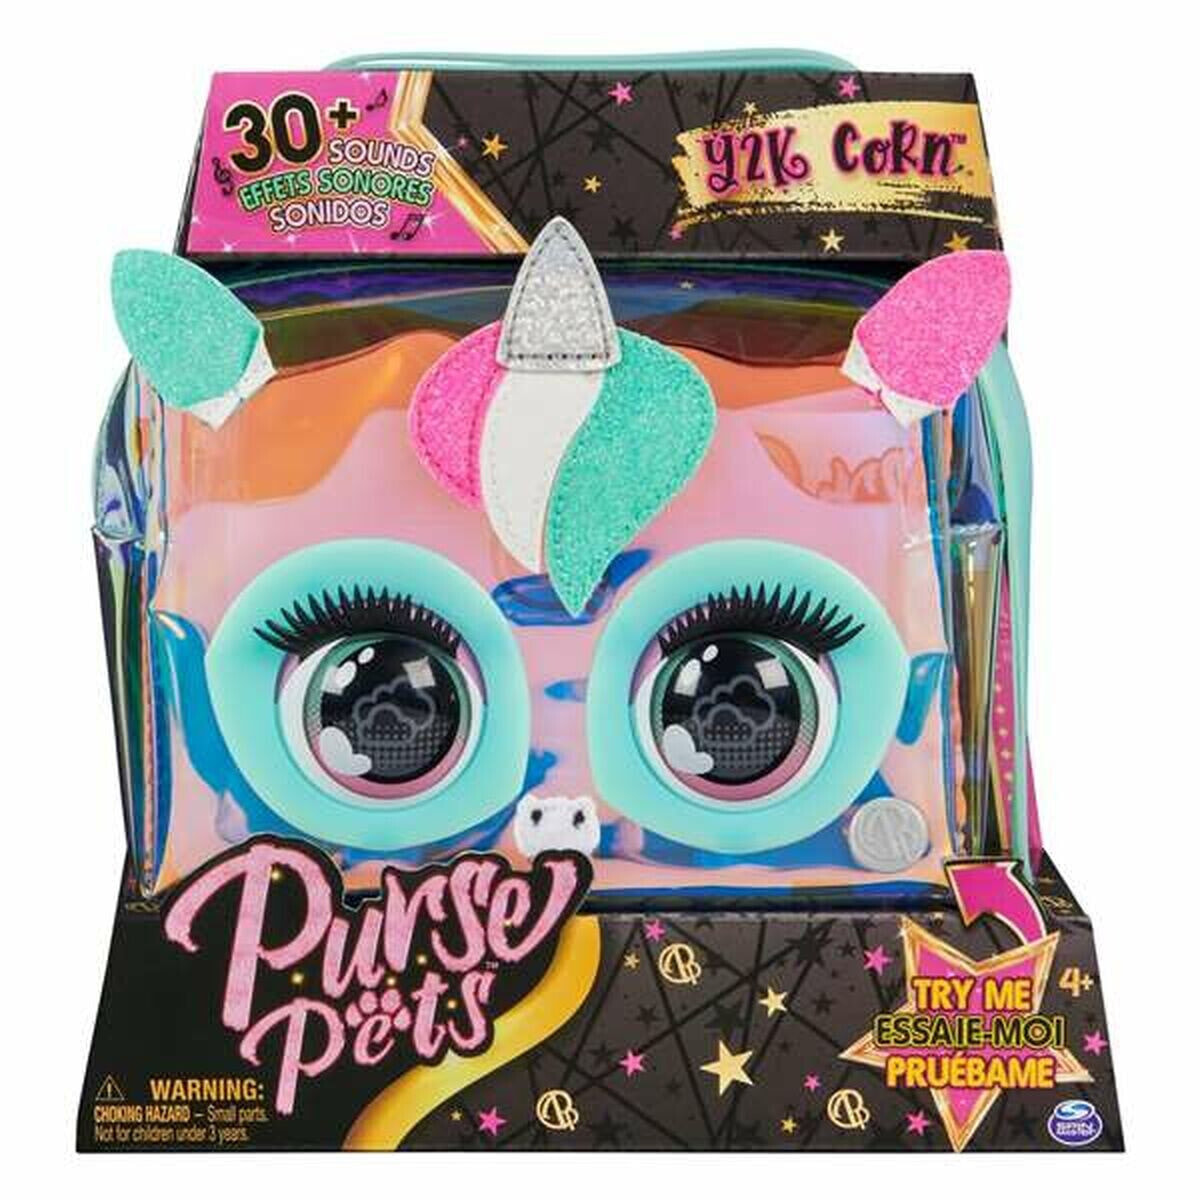 Purse Pets Purrisma Unicorn Разноцветный Девочка Наплечная сумка 6068208